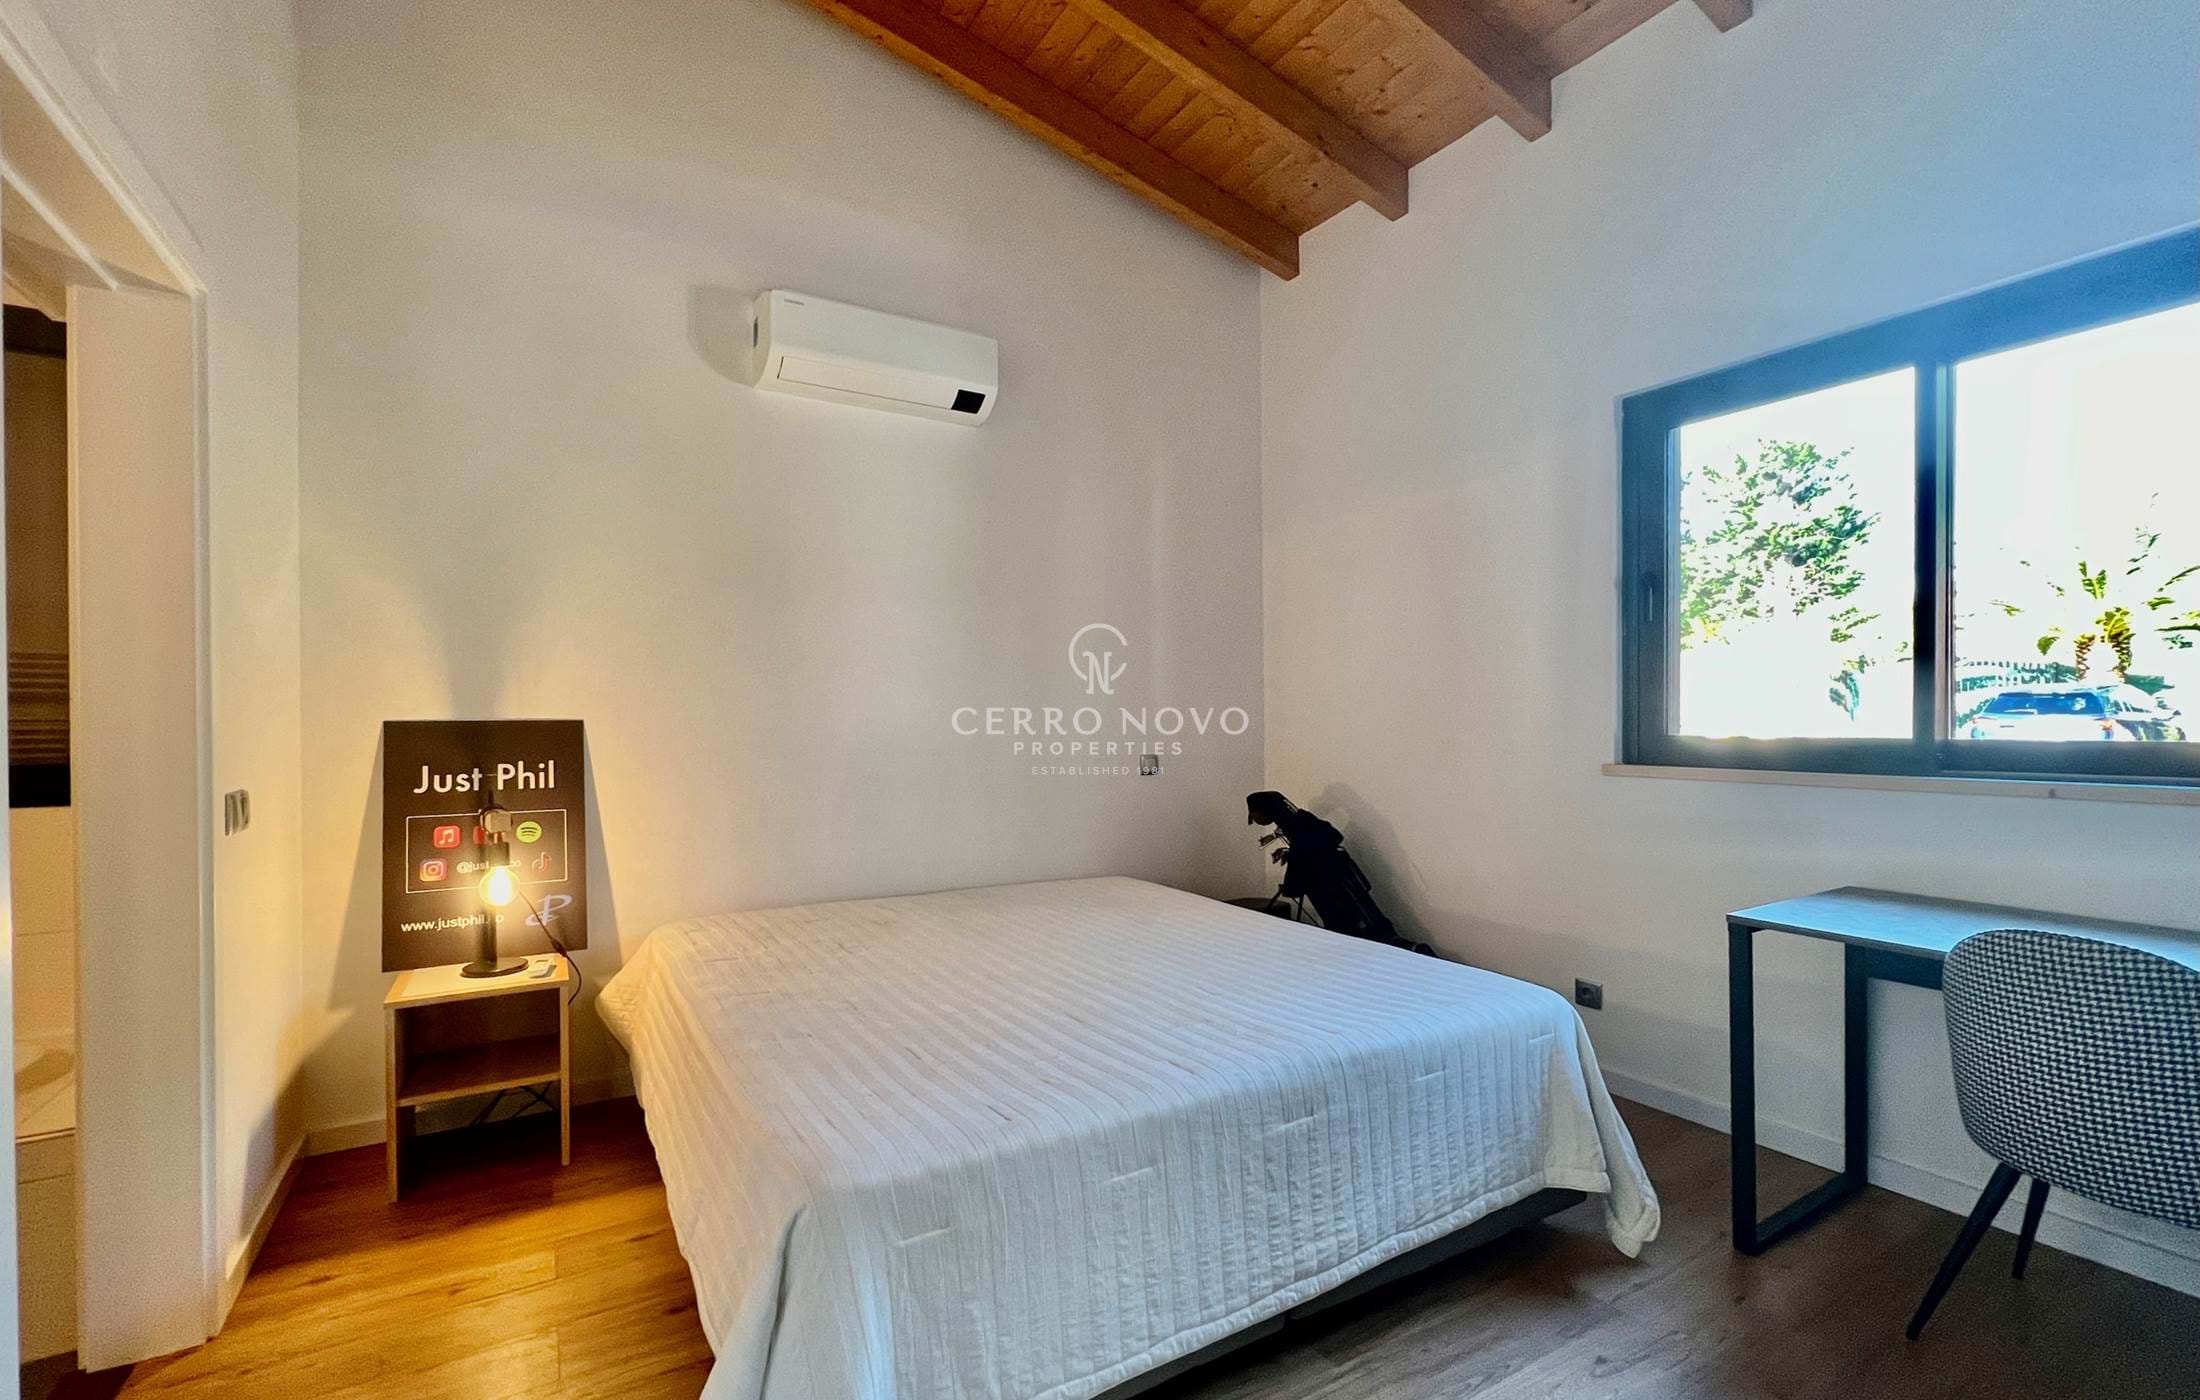 Lovely two bedroom villa near Alcantarilha